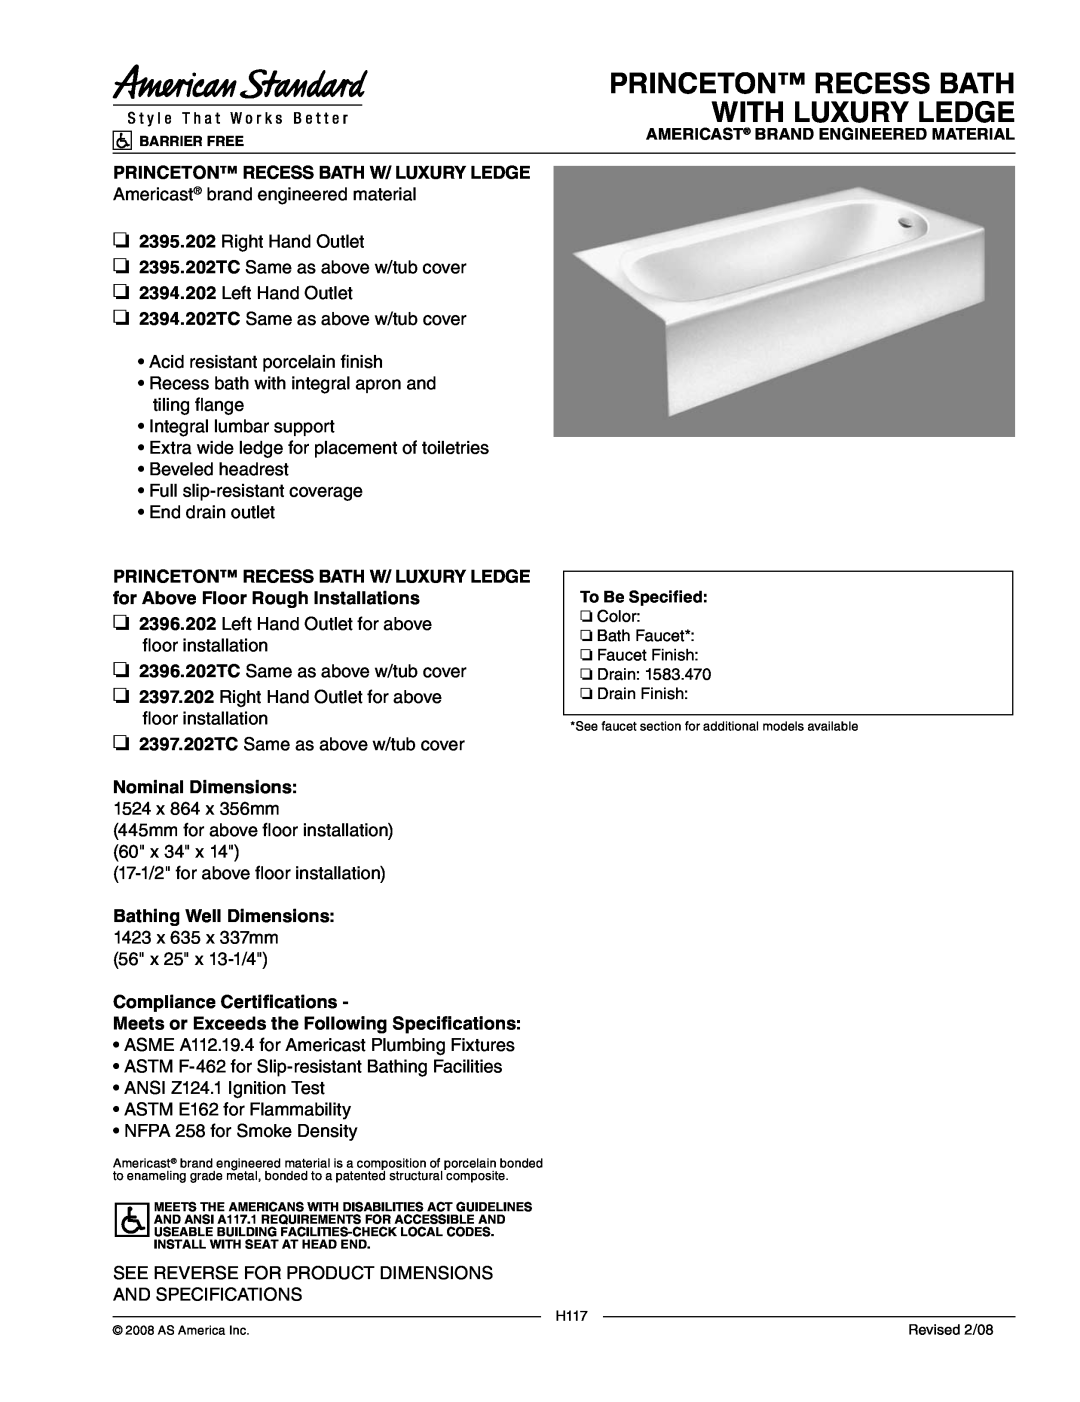 American Standard 2396.202TC, 2397.202, 2395.202TC dimensions Princeton Recess Bath With Luxury Ledge, Nominal Dimensions 